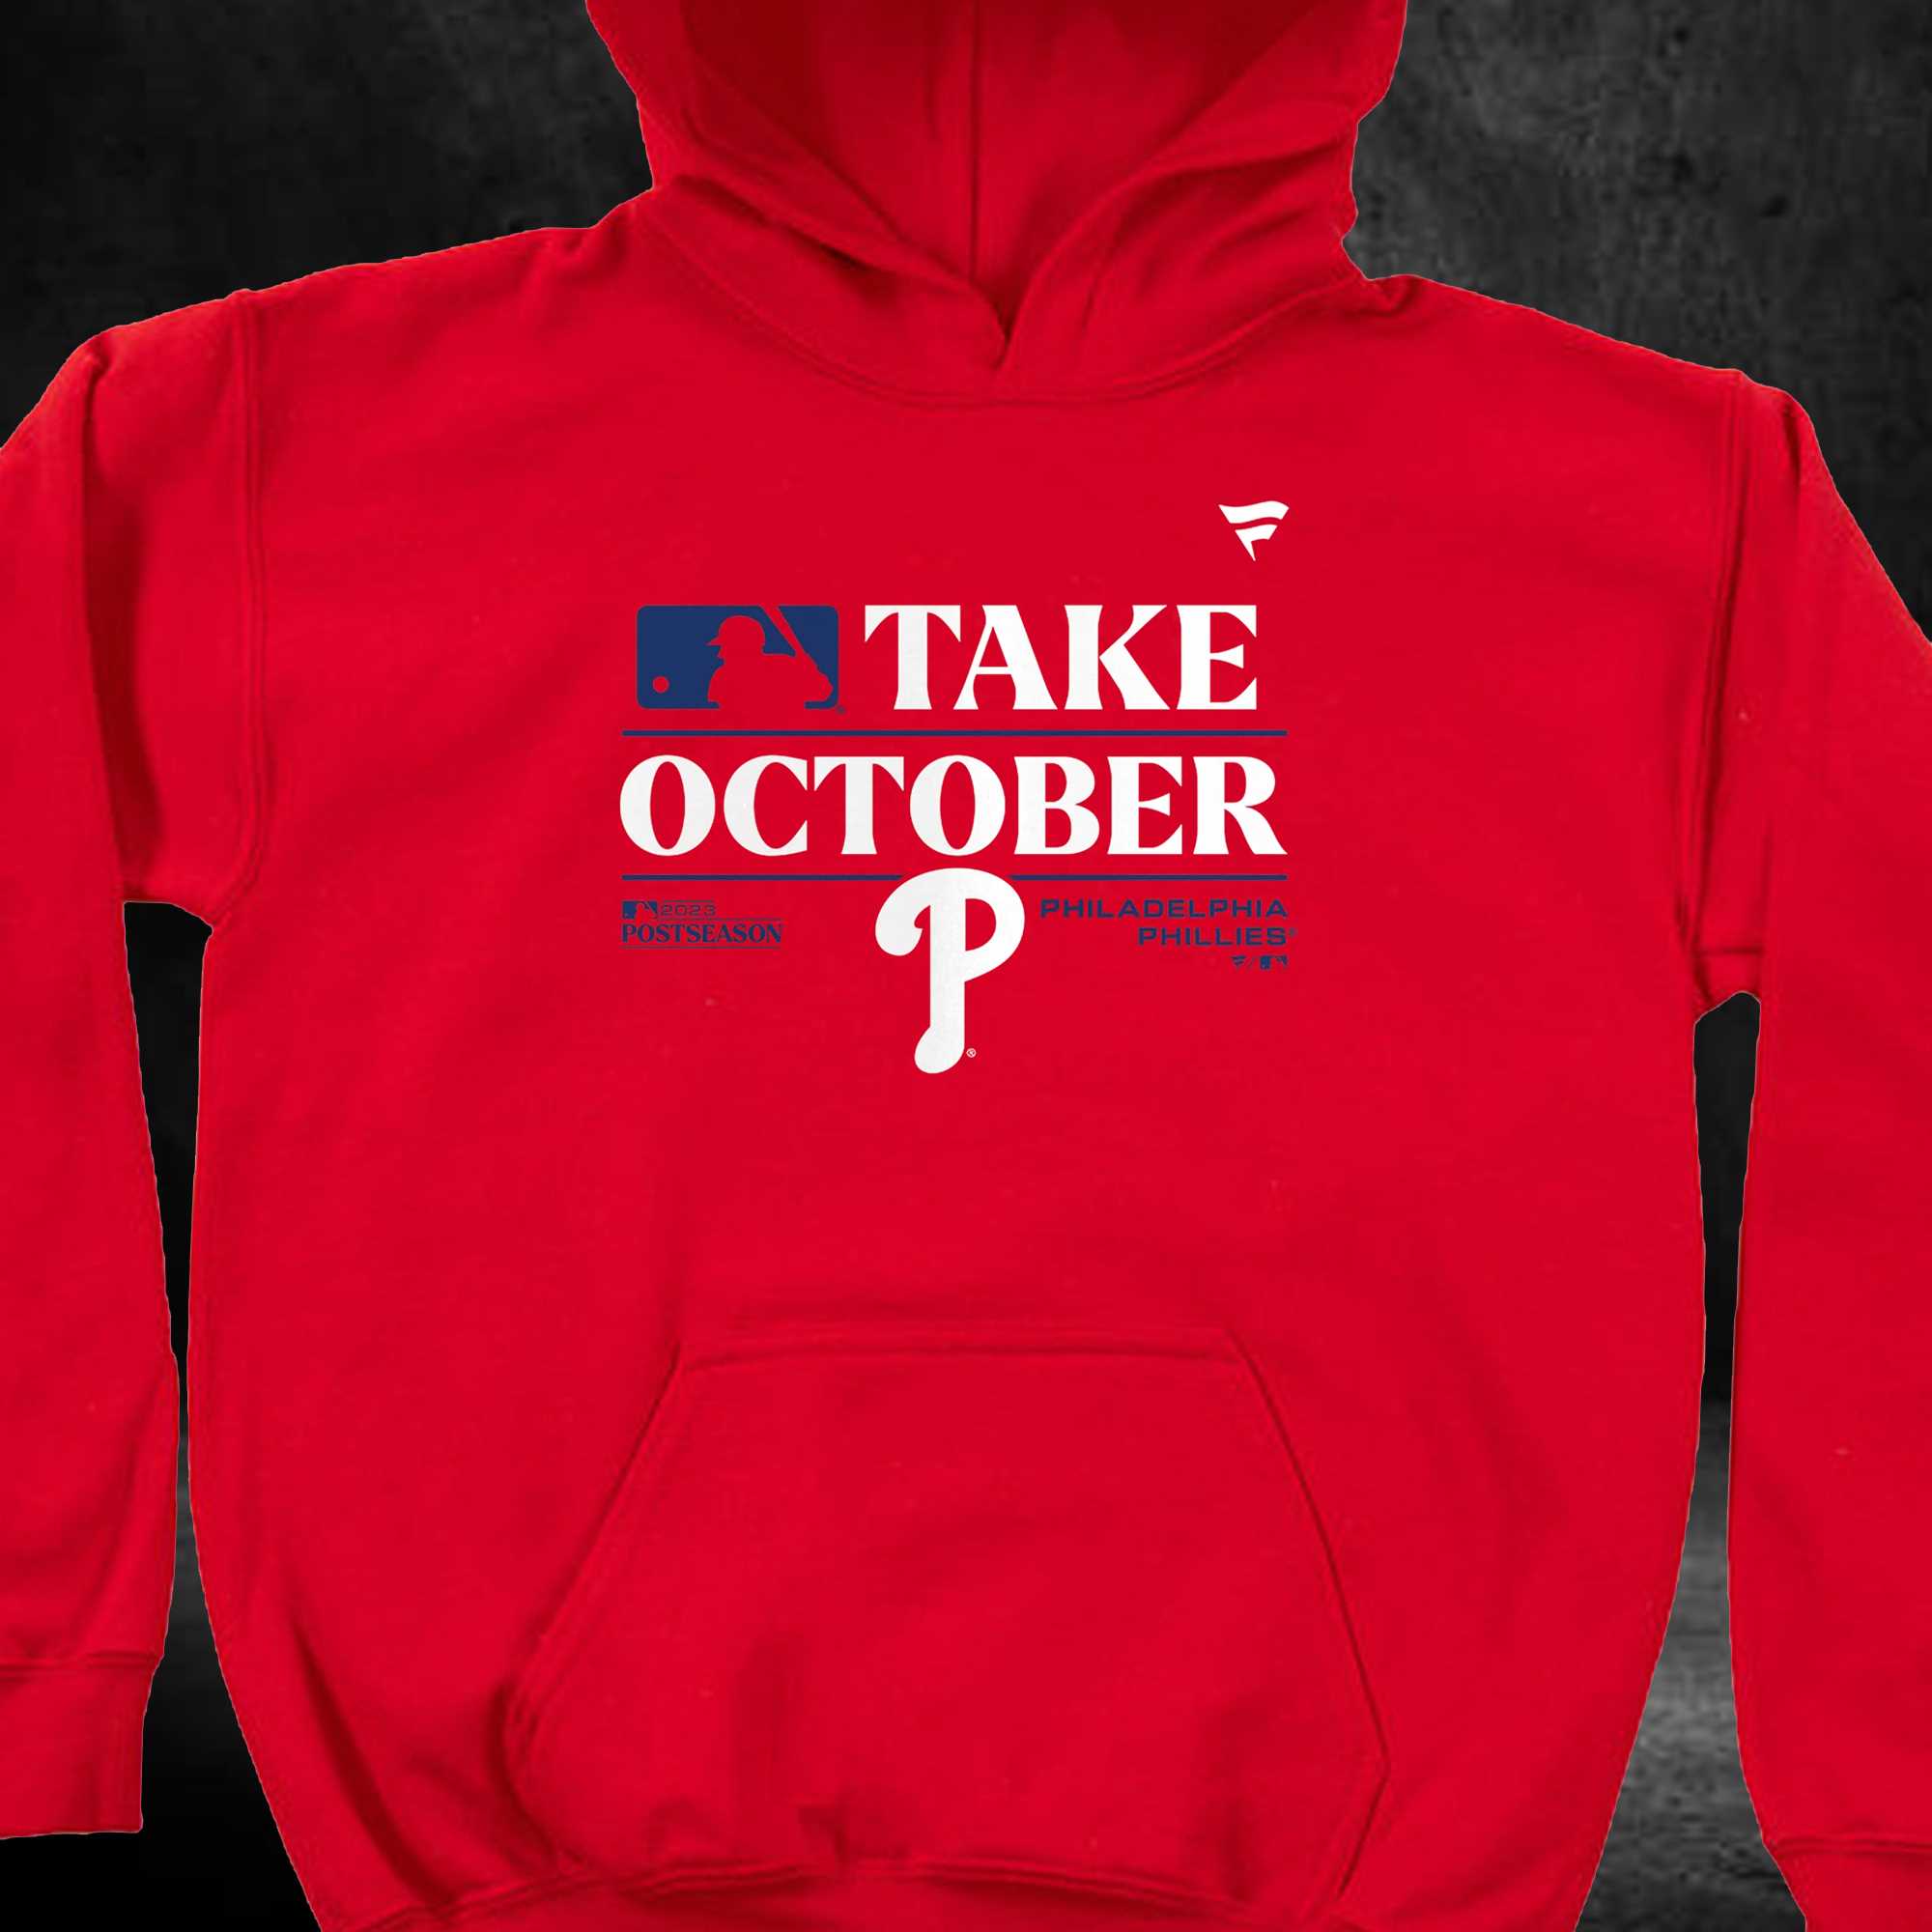 Take October 2023 Postseason Philadelphia Phillies T-Shirt, hoodie